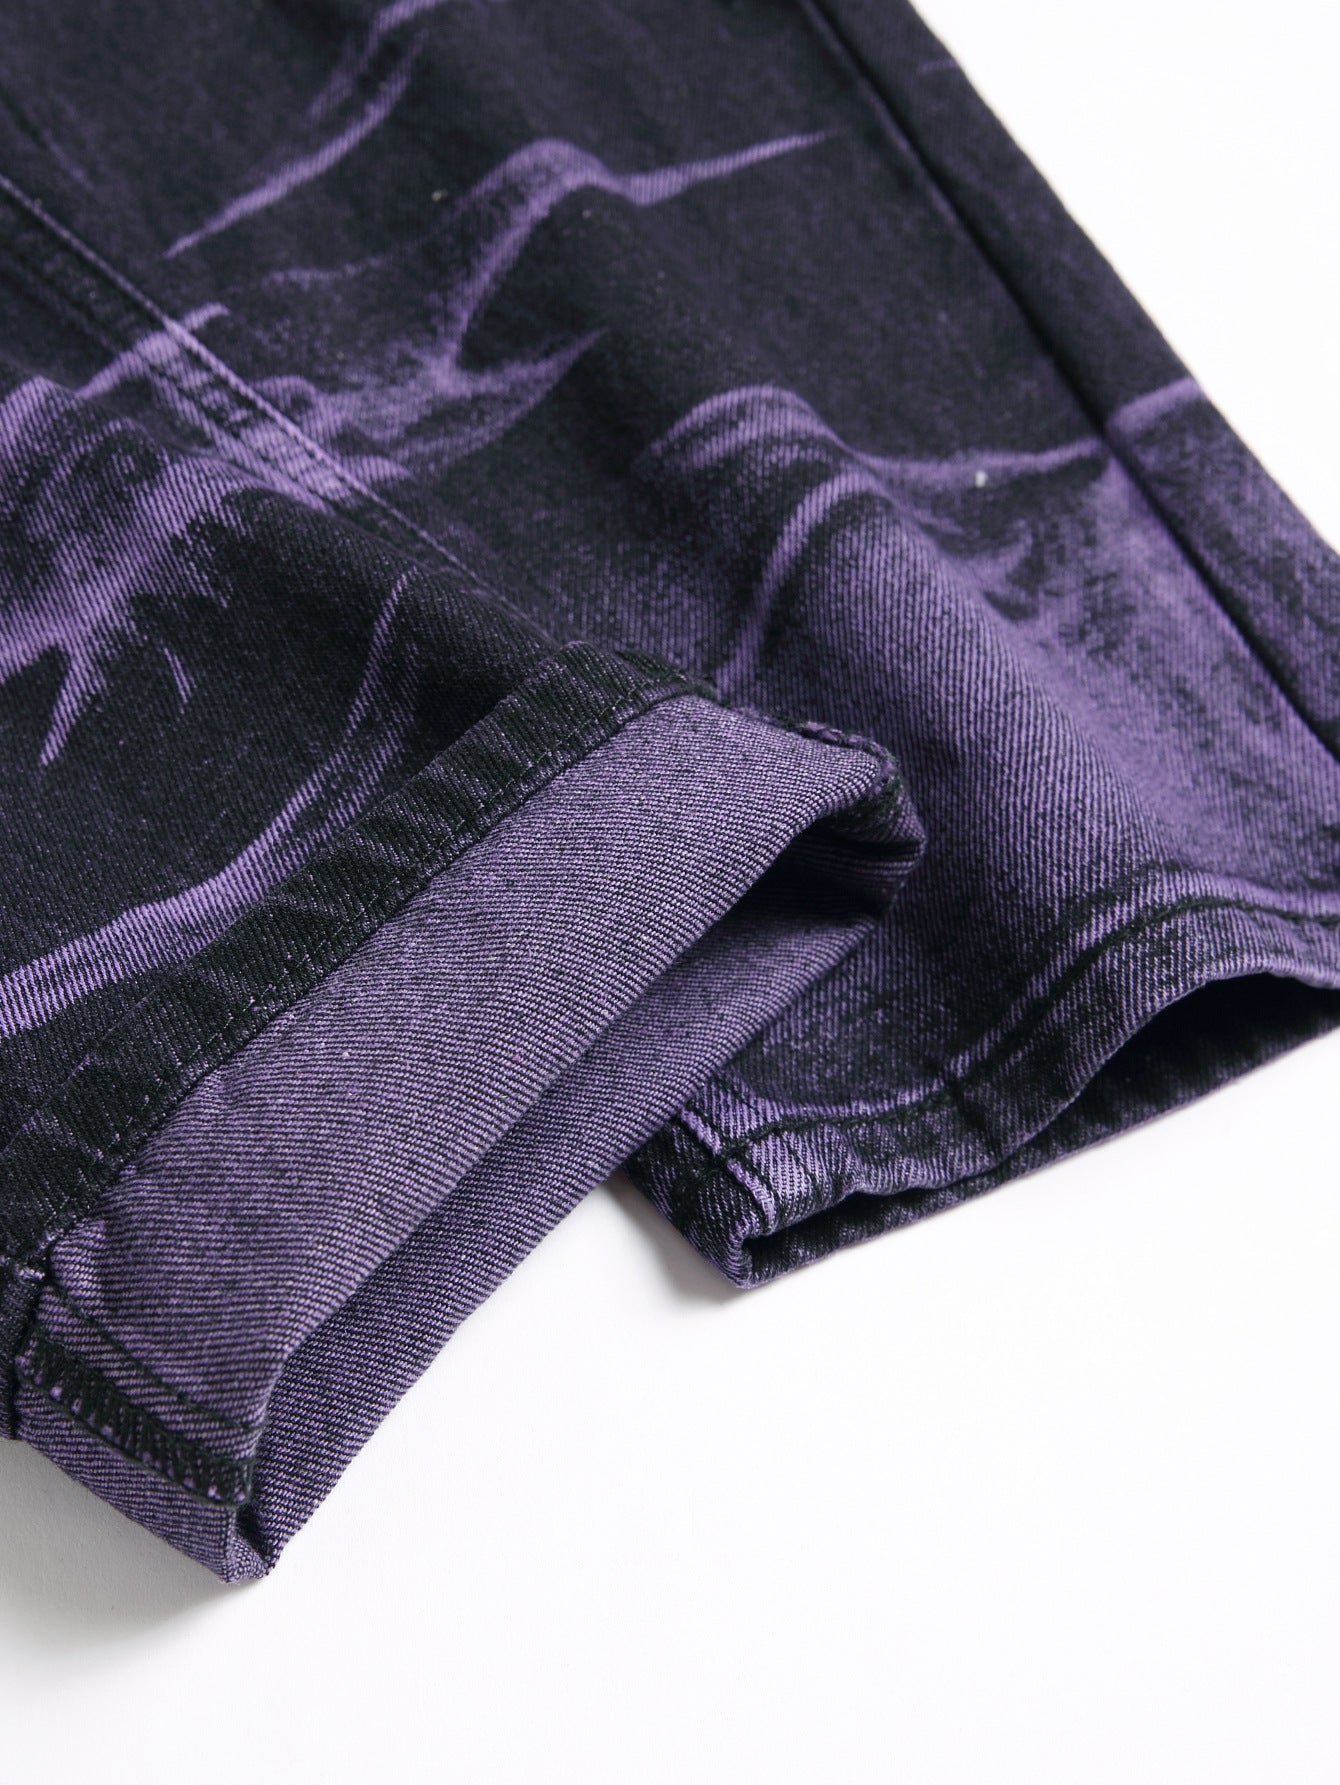 Purple And Black Urban Men's Denim Trousers